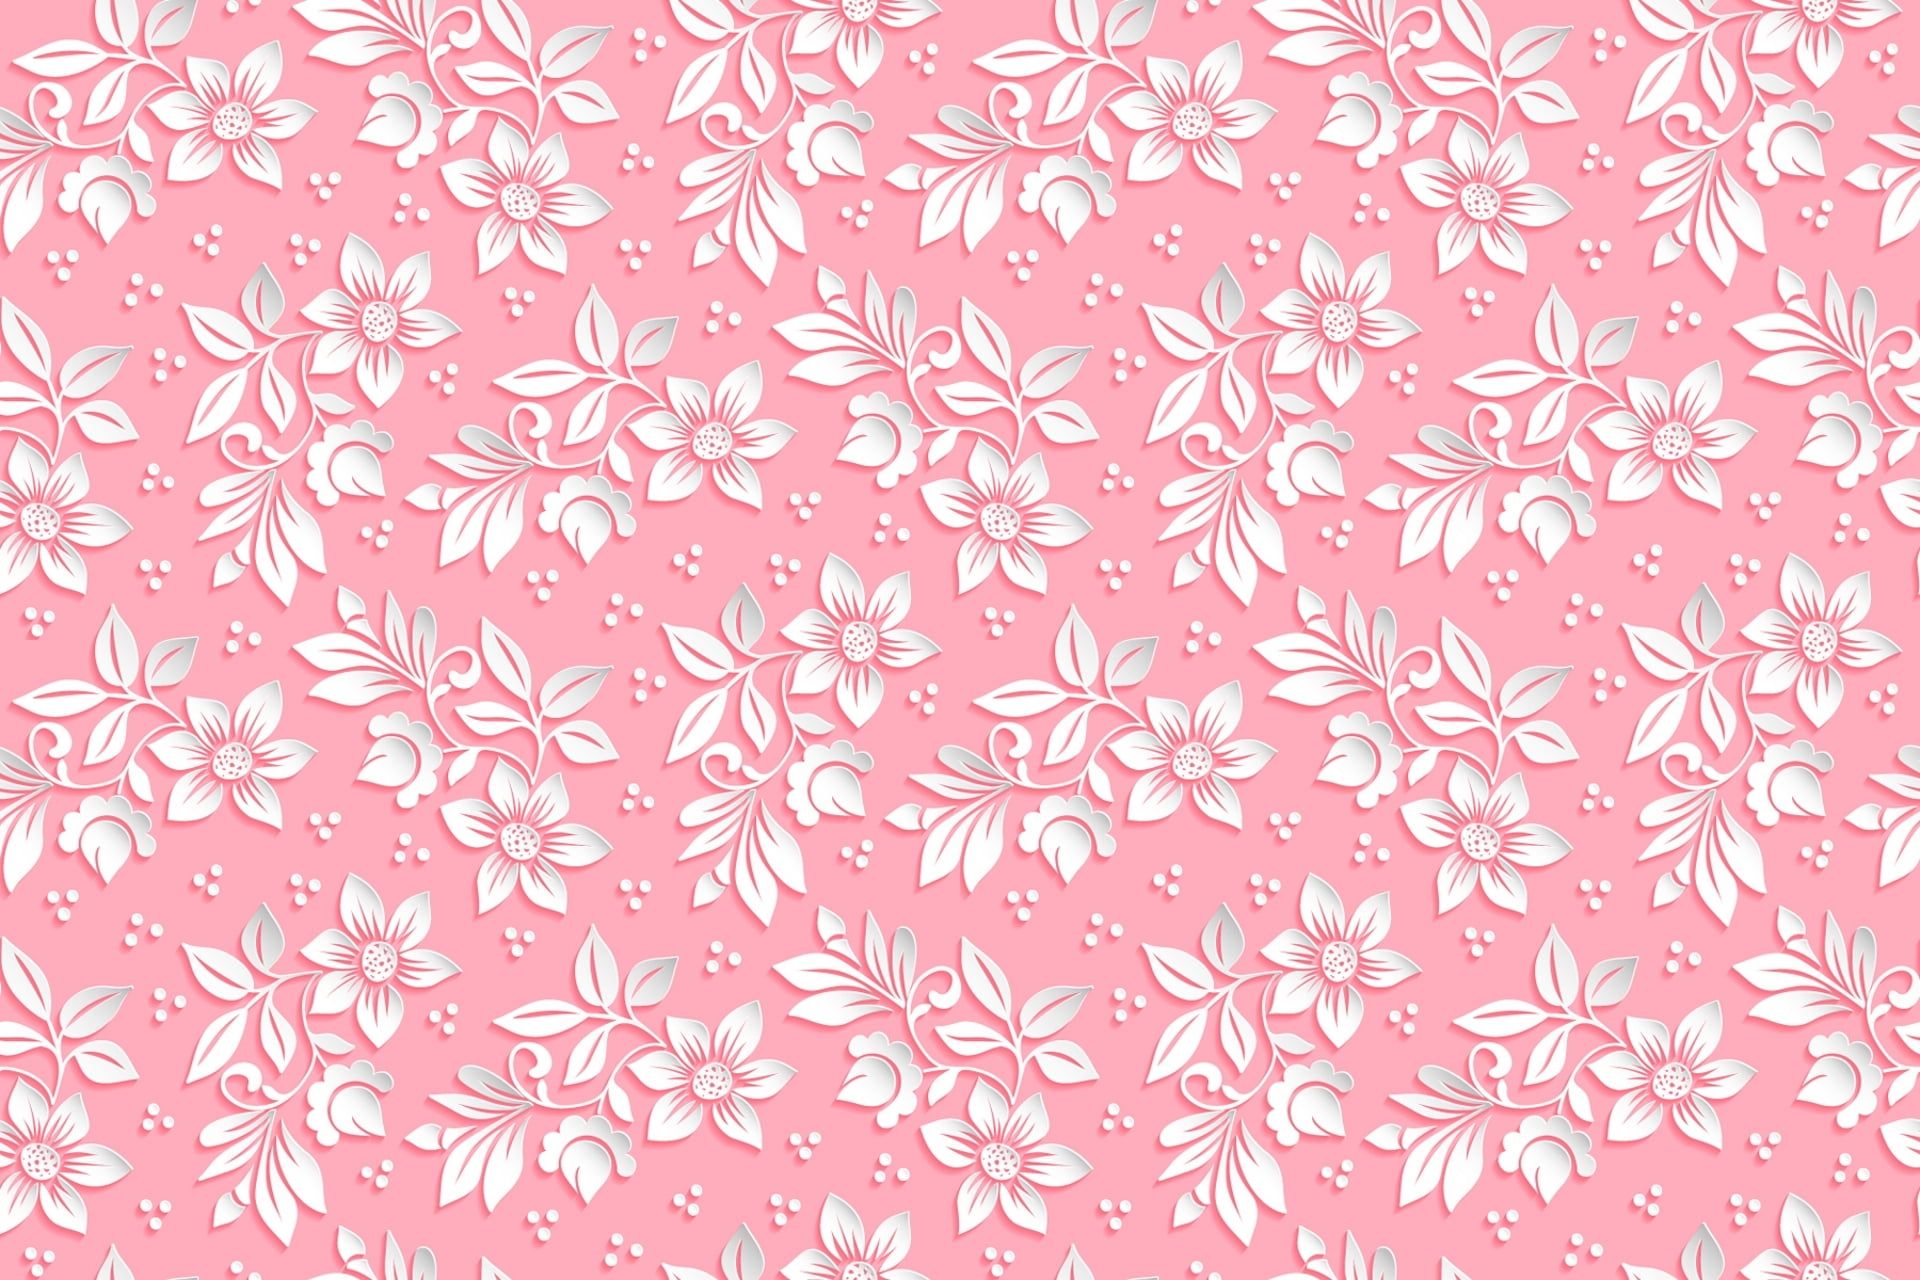 white petaled flowers wallpaper #flowers #background #pink #pattern the volume P #wallpaper #hdwallpap. Flower wallpaper, Wallpaper, Cute wallpaper for ipad